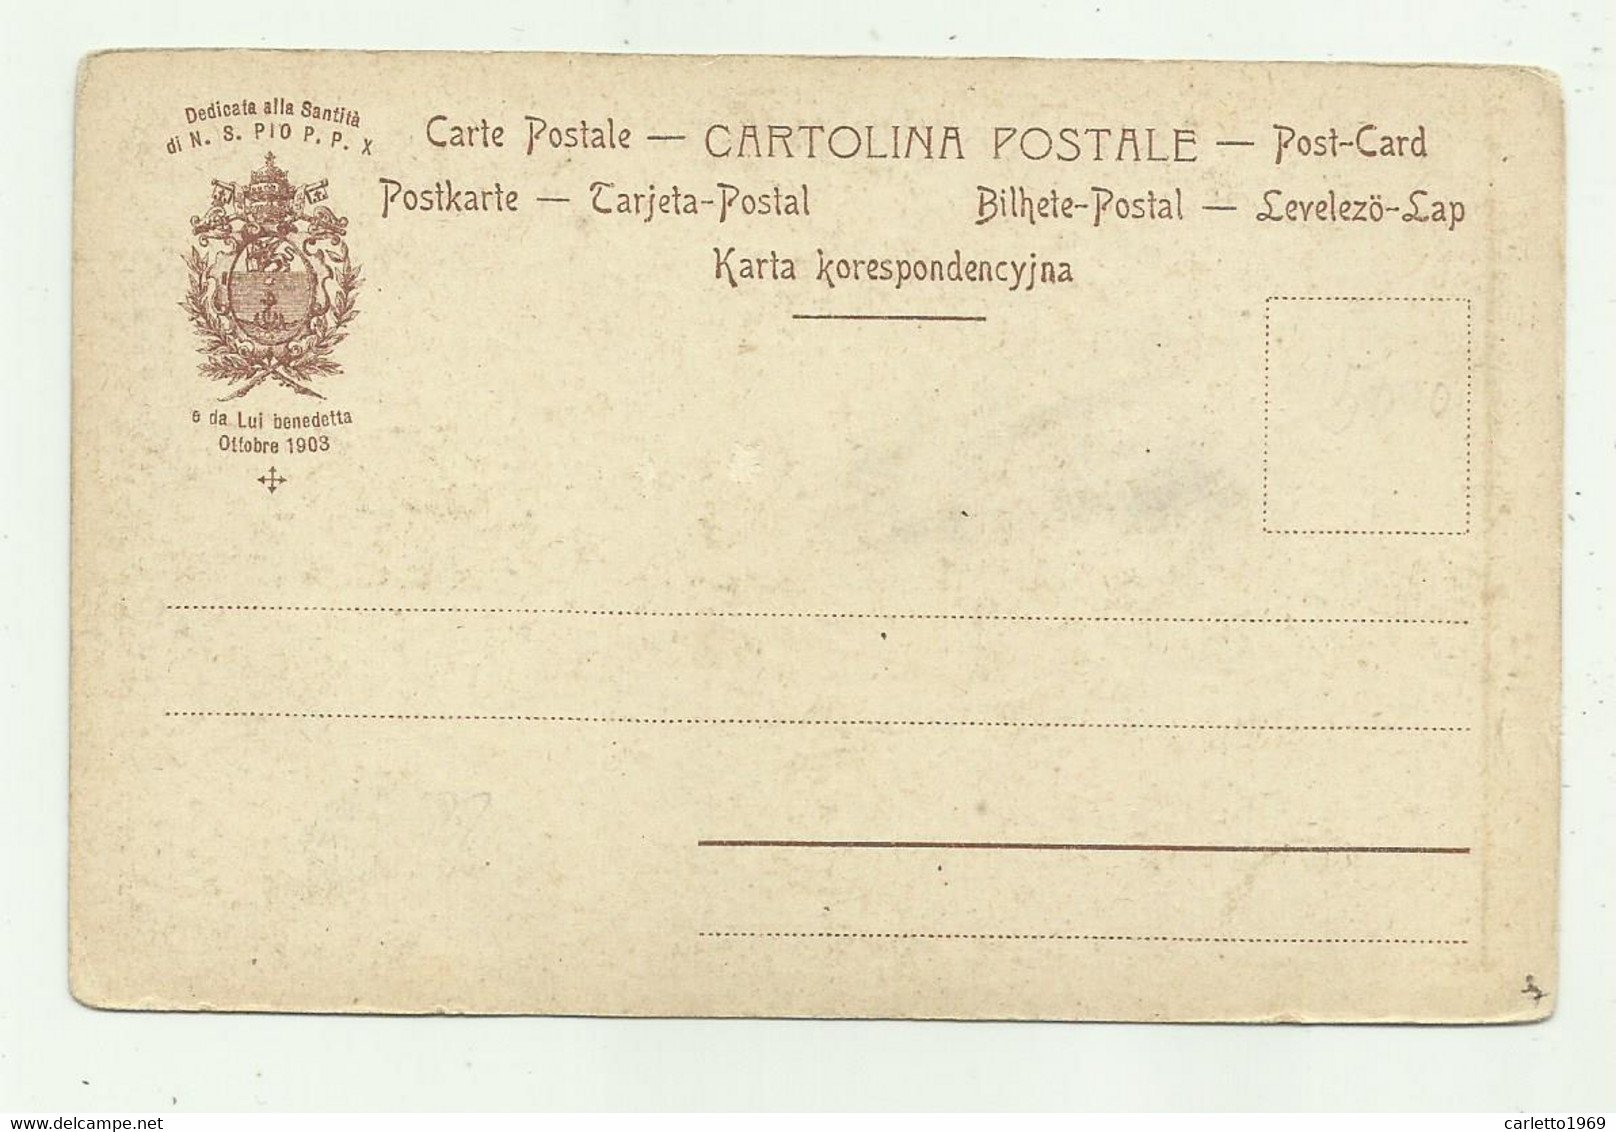 S.ELEUTERIO  MARTIRE DELL'EPIRO  - CARTOLINA DEDICATA A PIO P.P X DA LUI BENEDETTA OTTOBRE 1903 -   NV  FP - Santos